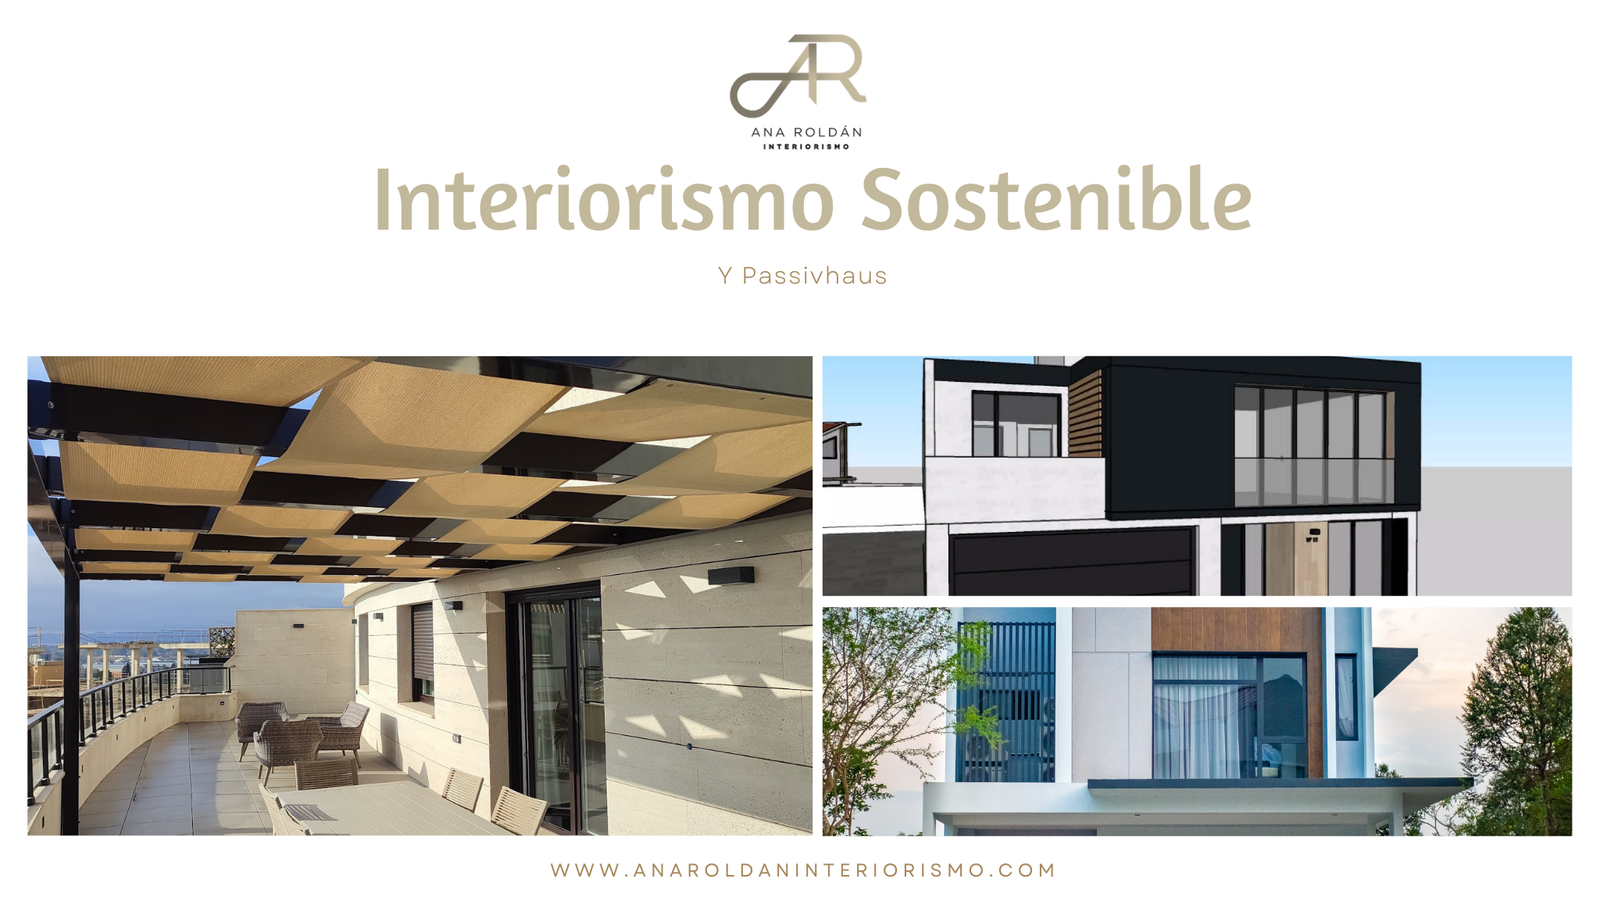 Interiorismo sostenible y Passivhaus